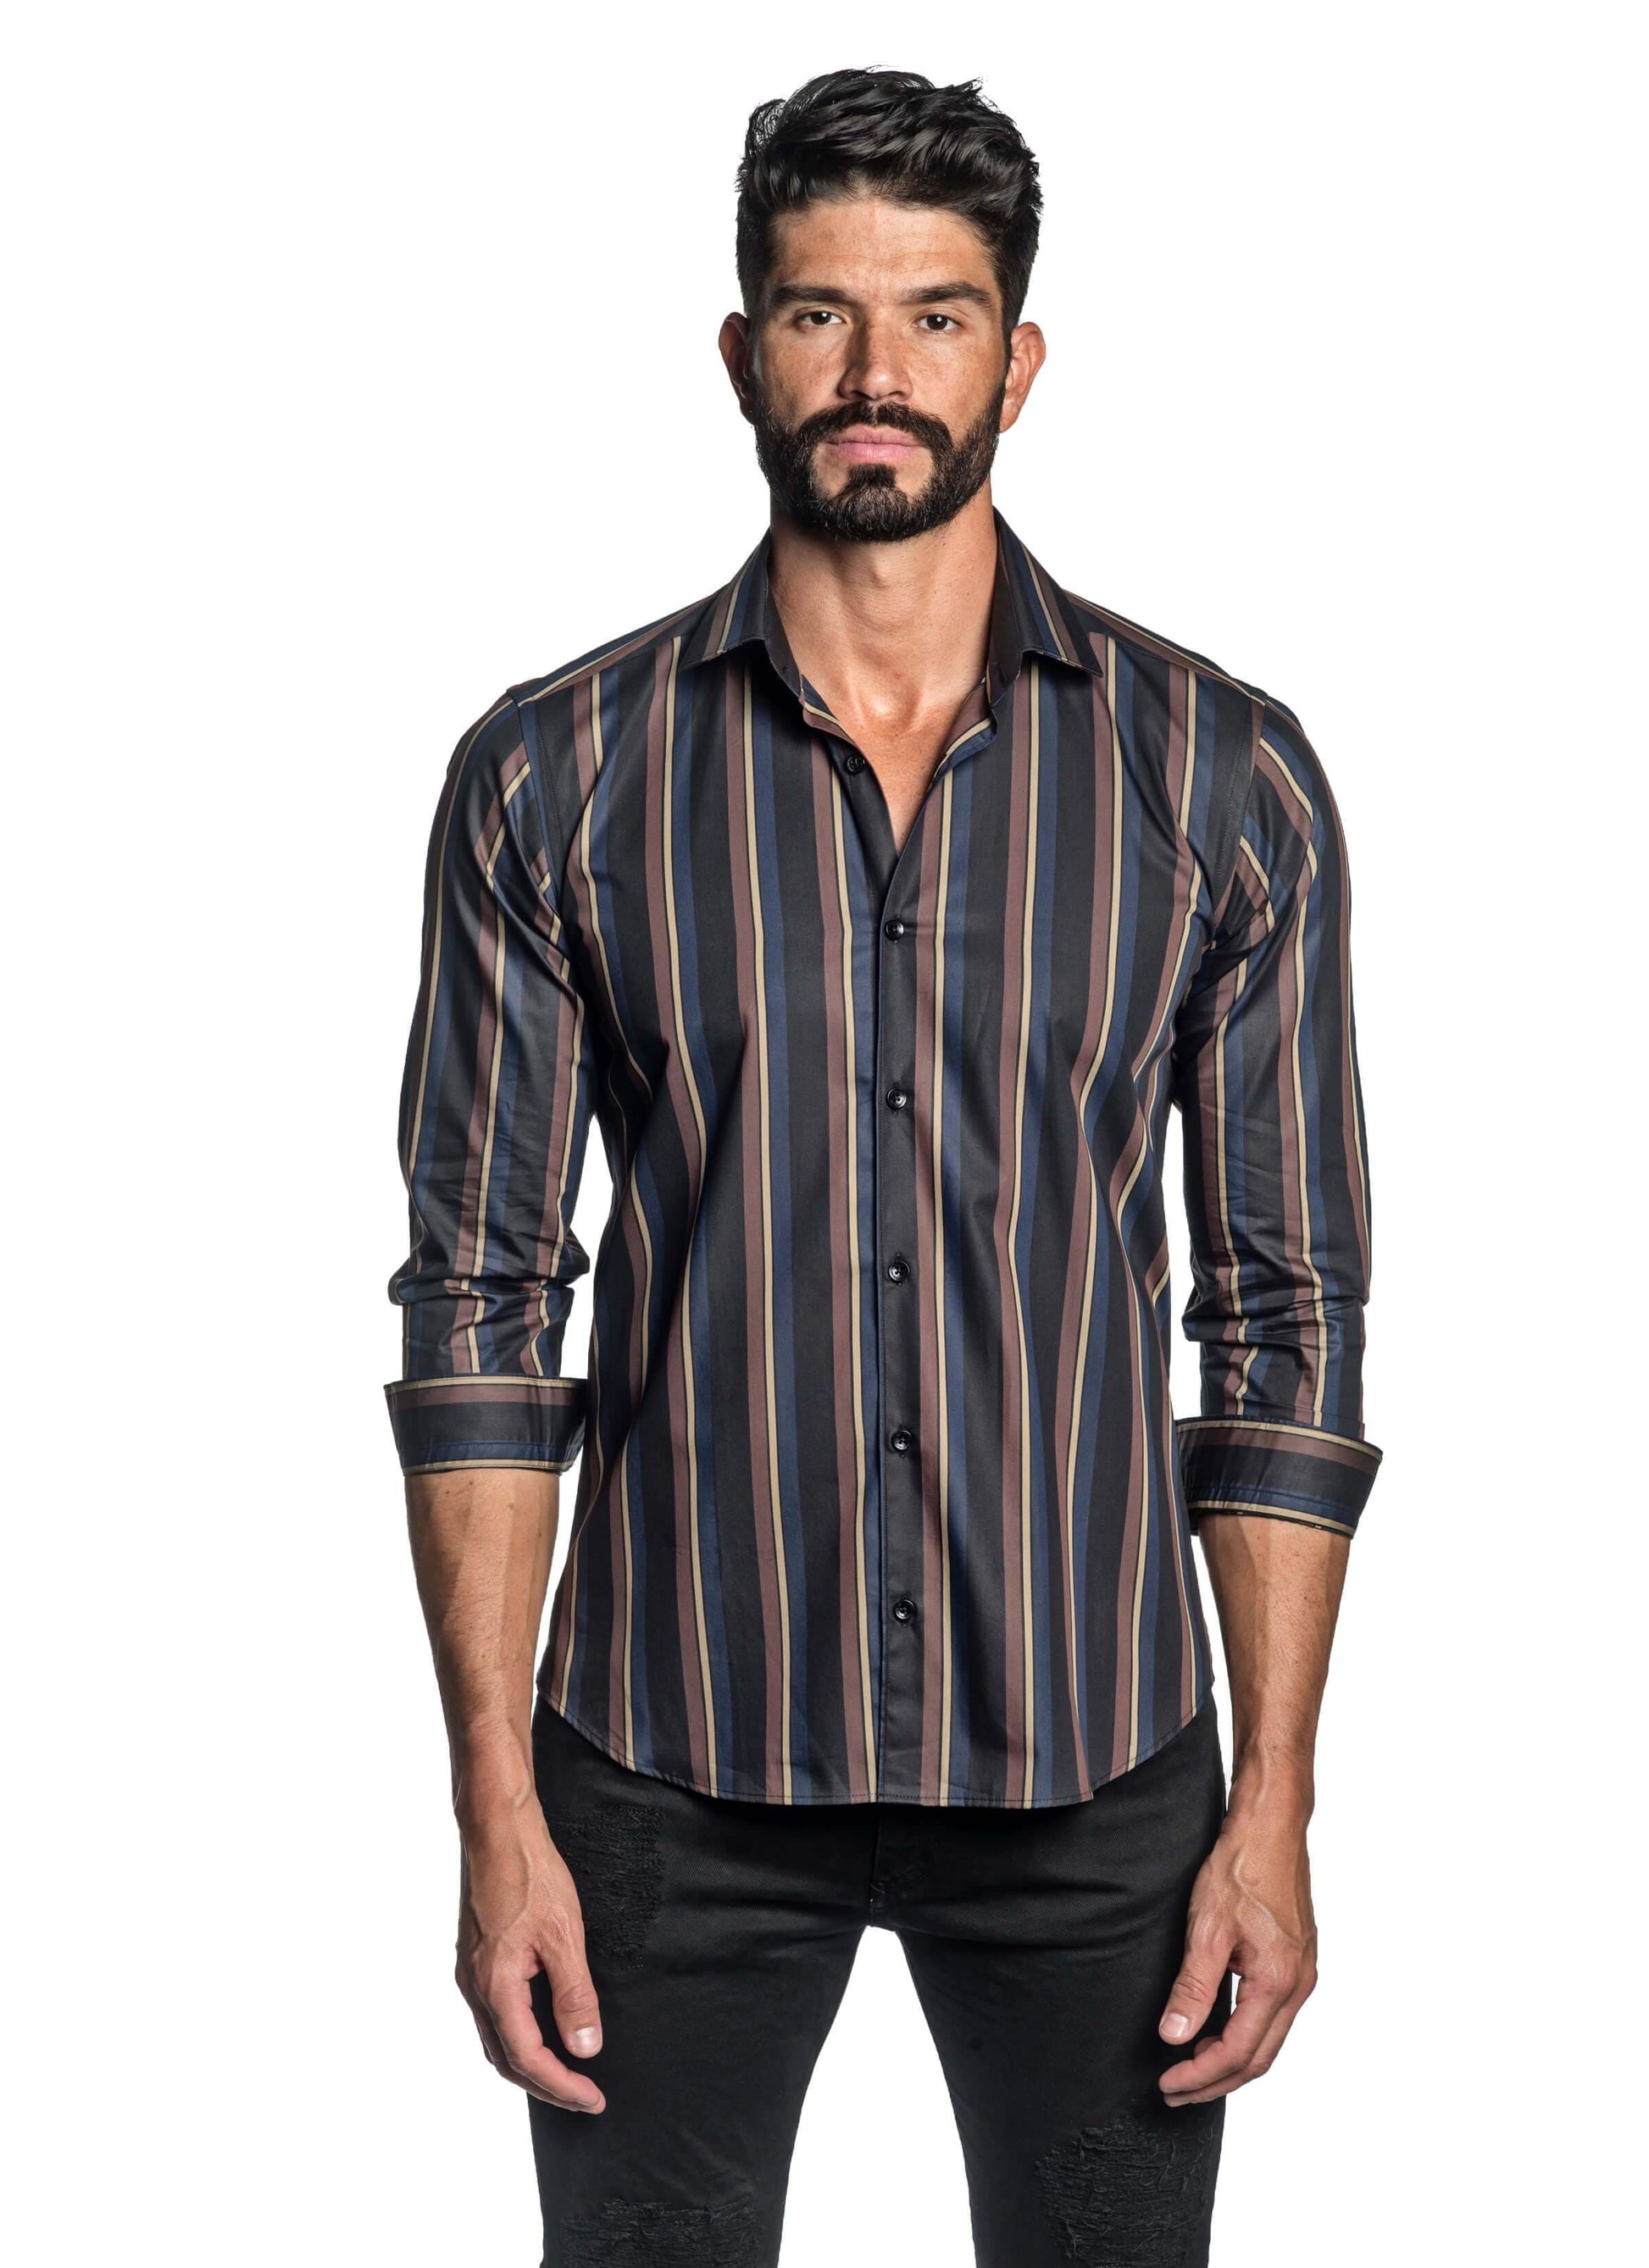 Black Blue and Brown Stripe Shirt for Men T-2646 - Front - Jared Lang